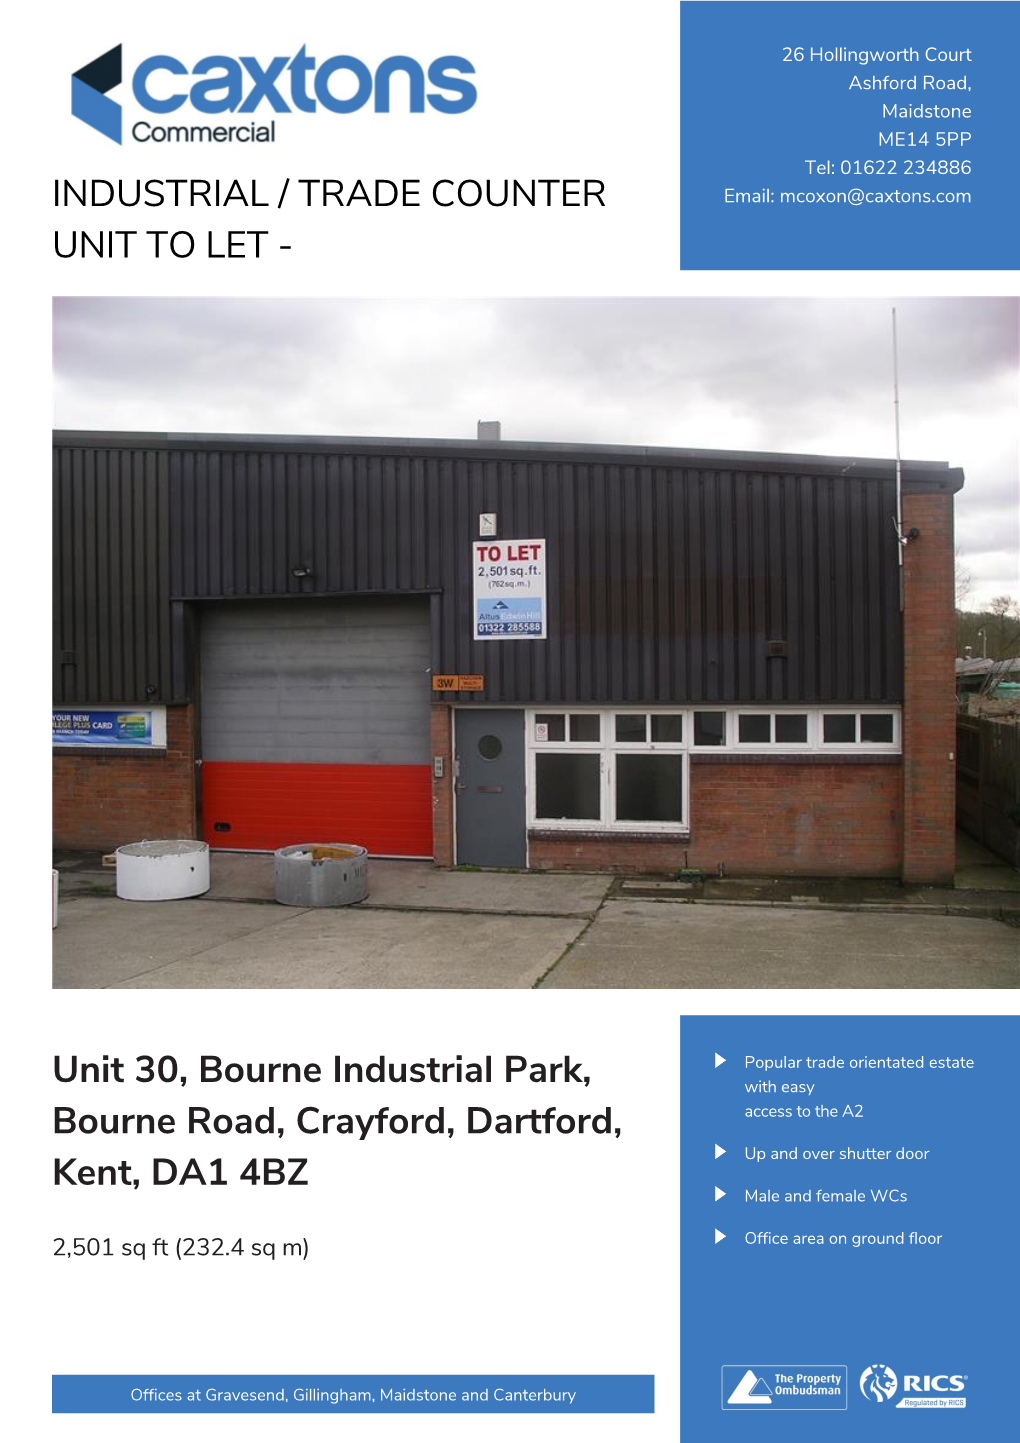 Unit 30, Bourne Industrial Park, Bourne Road, Crayford, Dartford, Kent, DA1